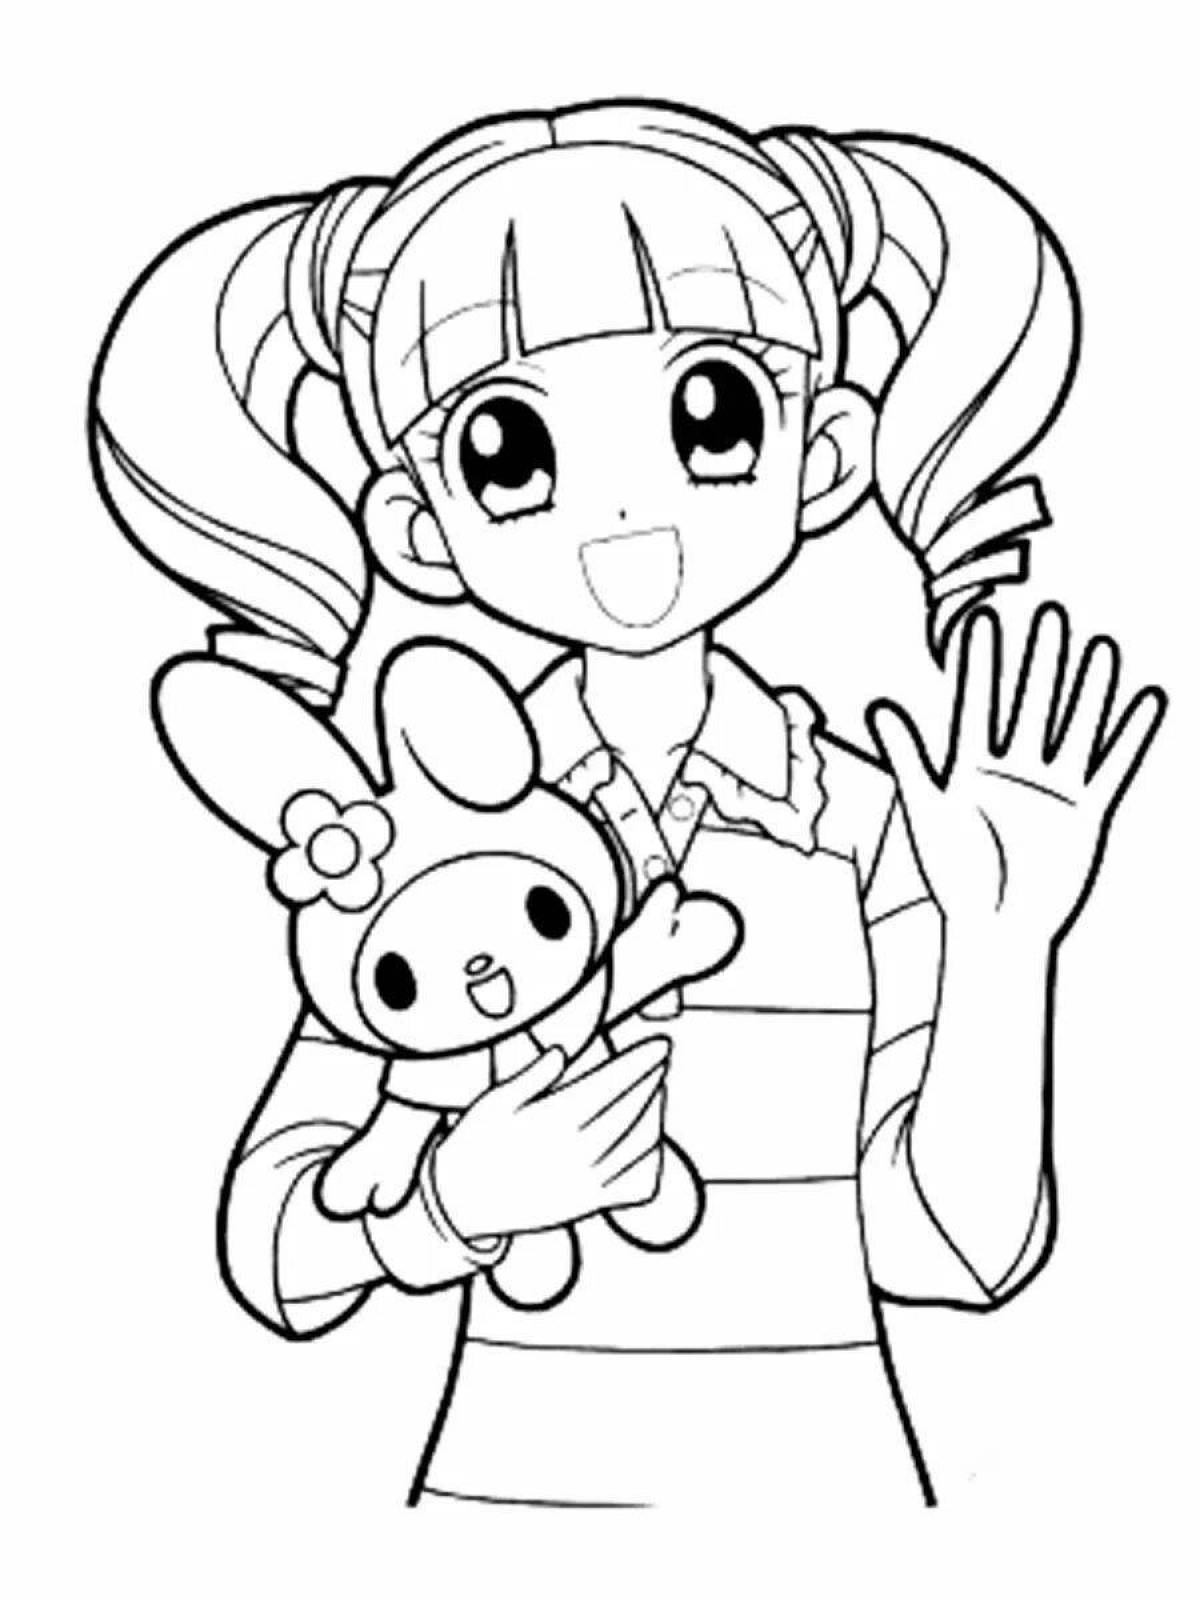 Kurumi and Mai Melody's playful coloring page